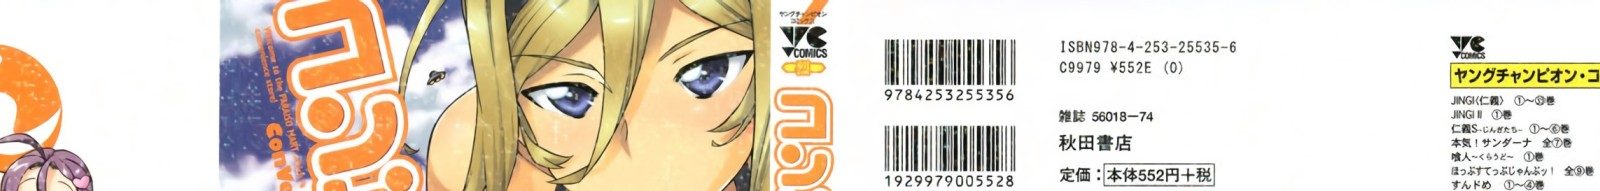 Conveni-N (Konbinin) [Manga] [08/08] [Jpg] [Mega]